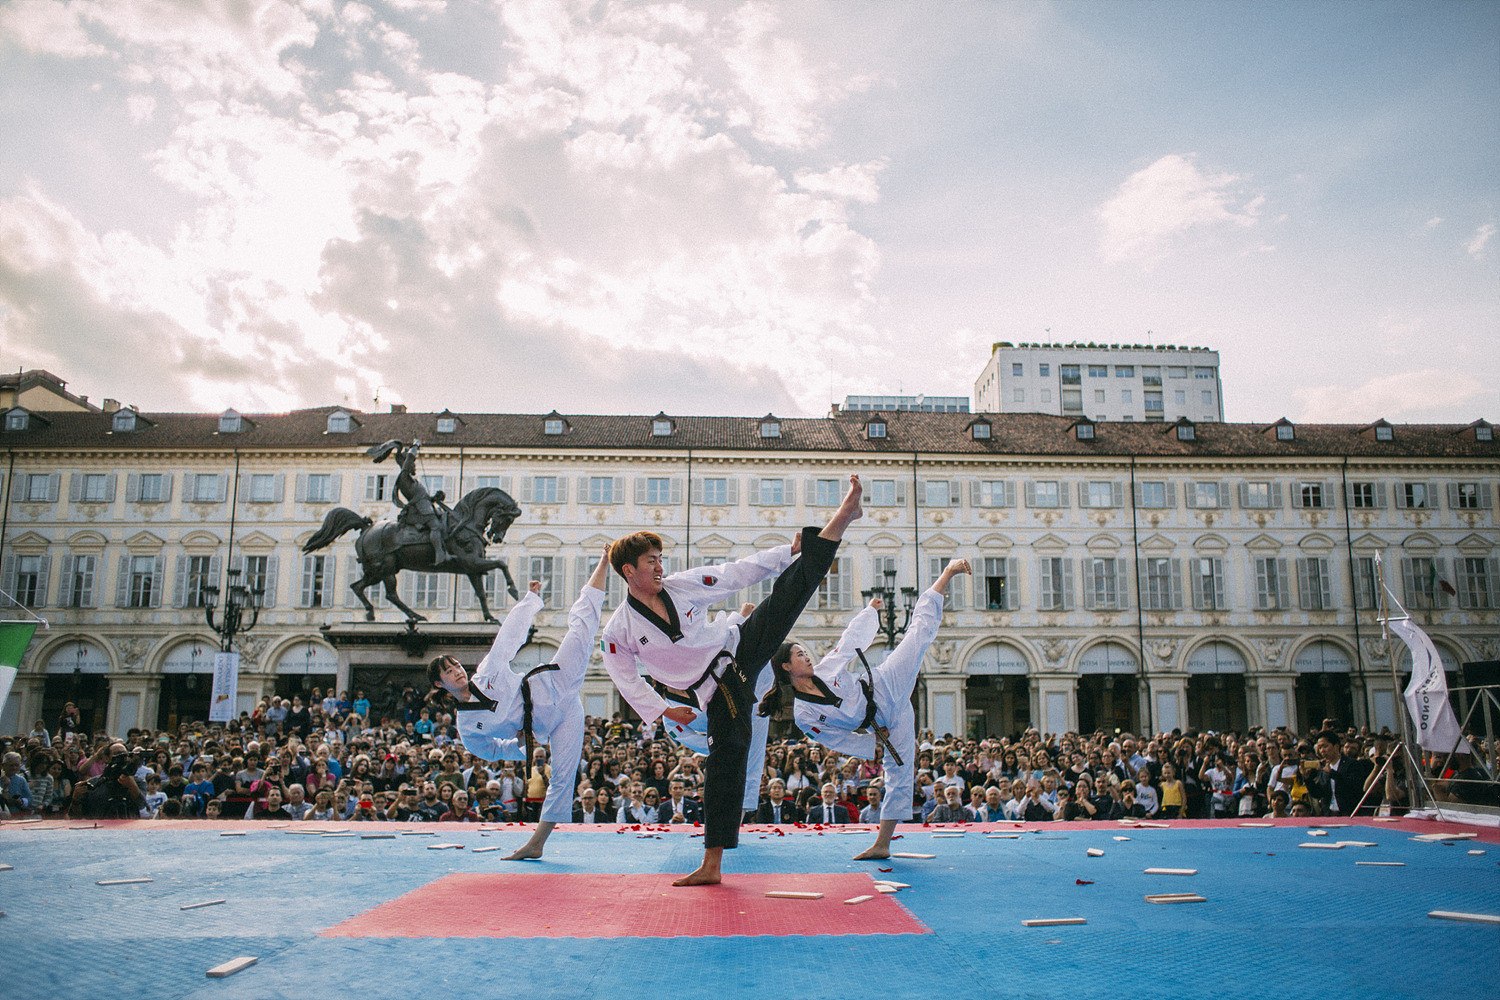 World Taekwondo demonstration team reach halfway point of Italy tour